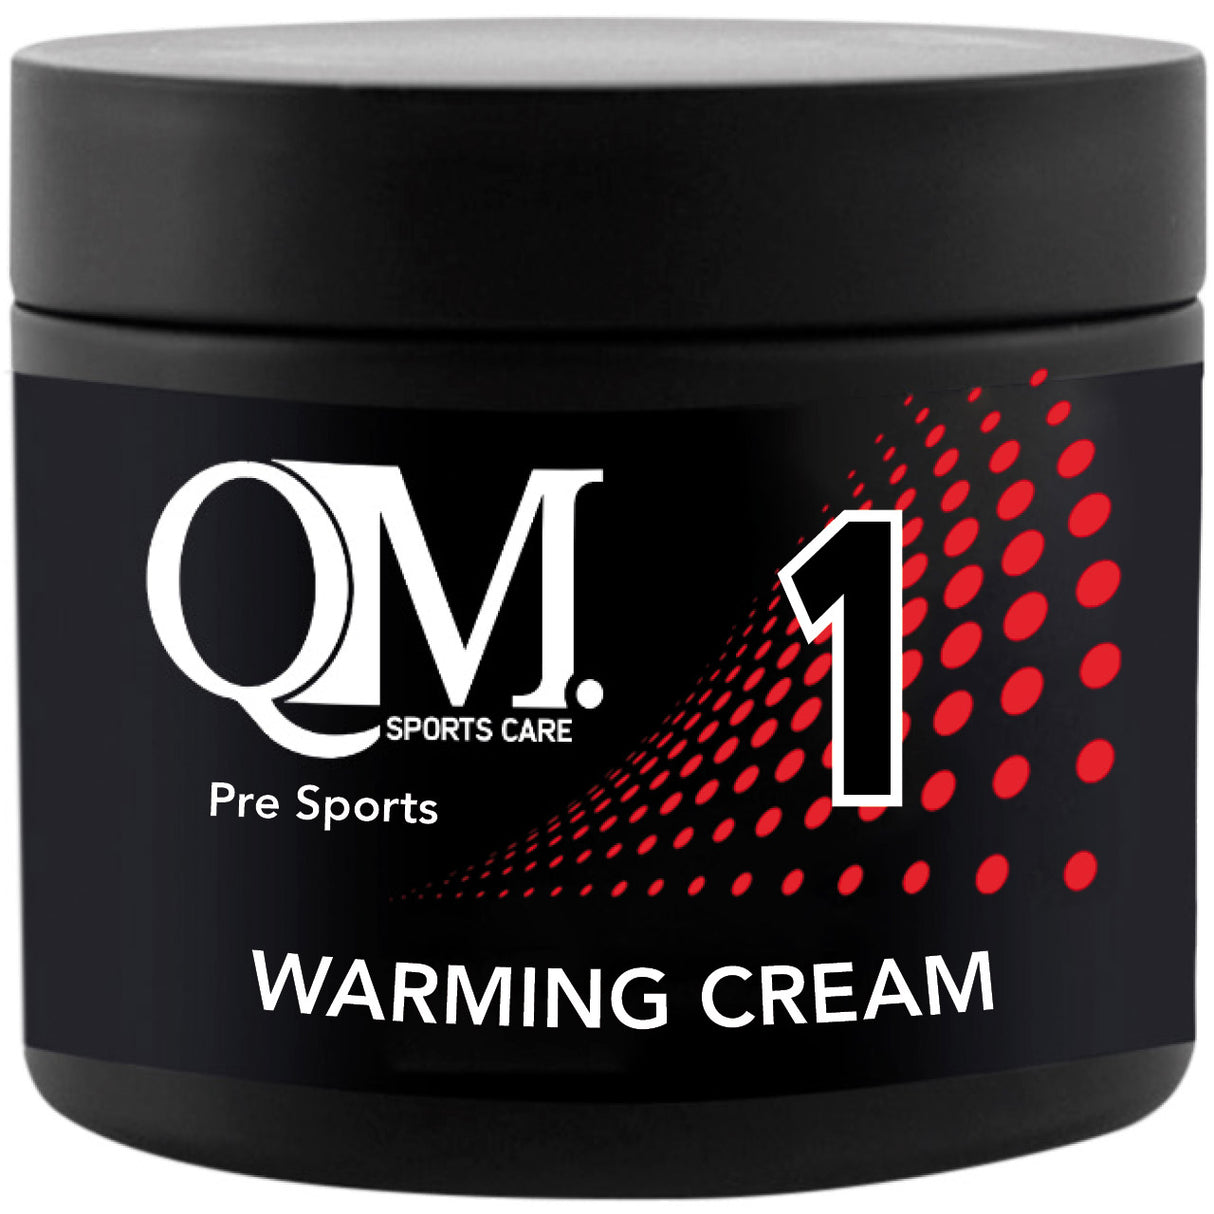 Qm 1 warming cream pot 200ml